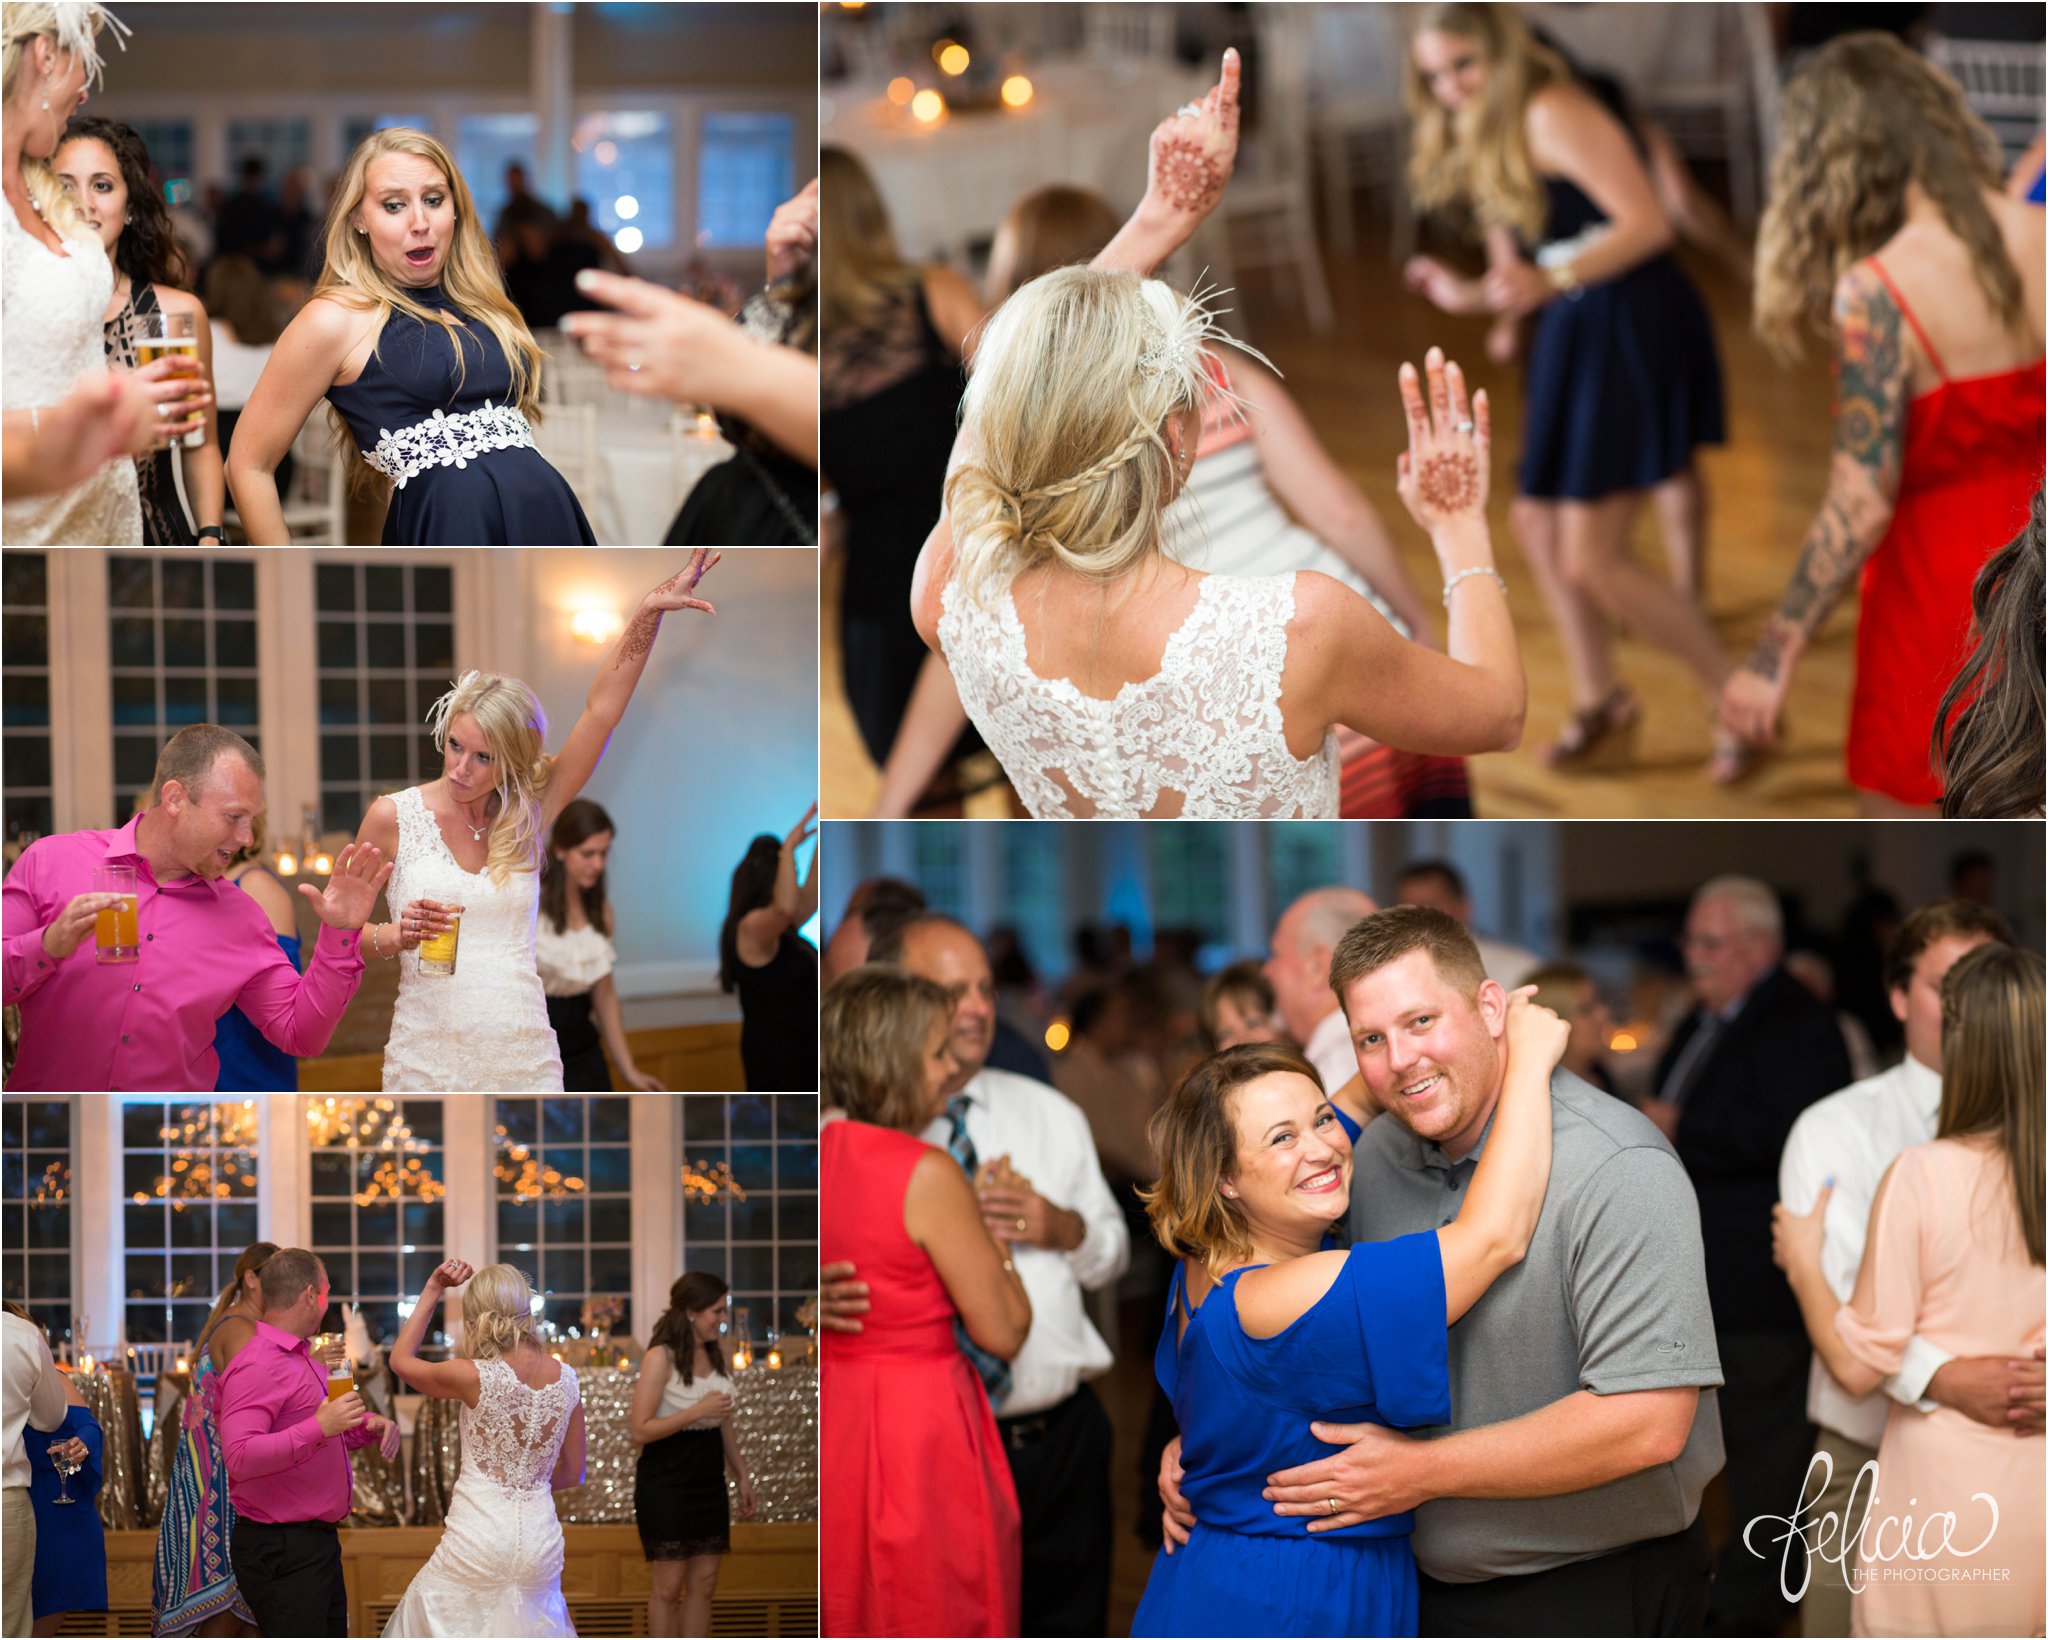 The Hawthorne Hosue | Reception | Party | Dancing | Kansas City Wedding | Felicia The Photographer